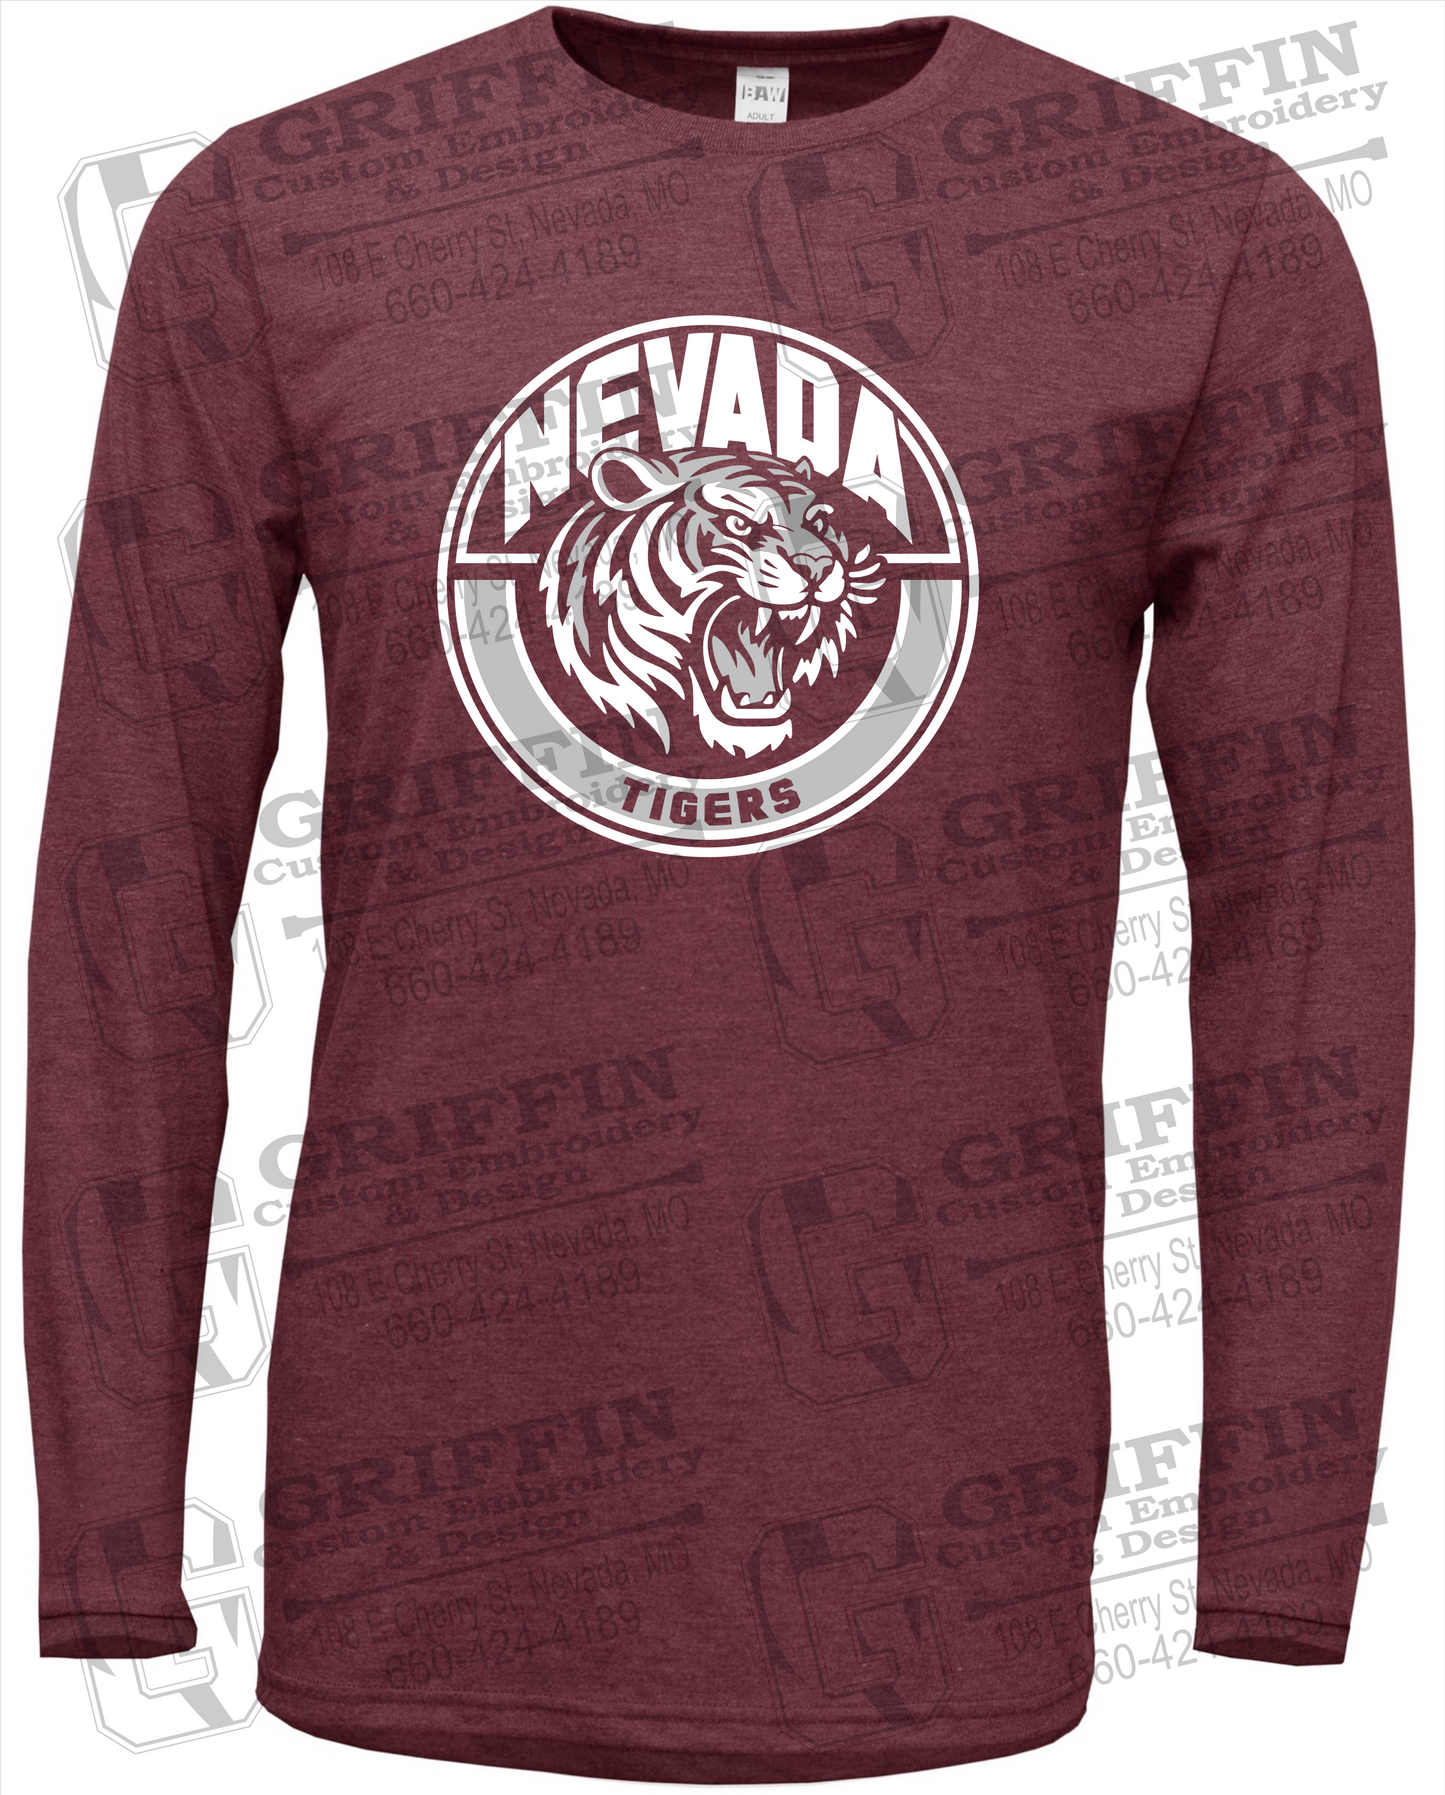 Soft-Tek Long Sleeve T-Shirt - Nevada Tigers 24-H